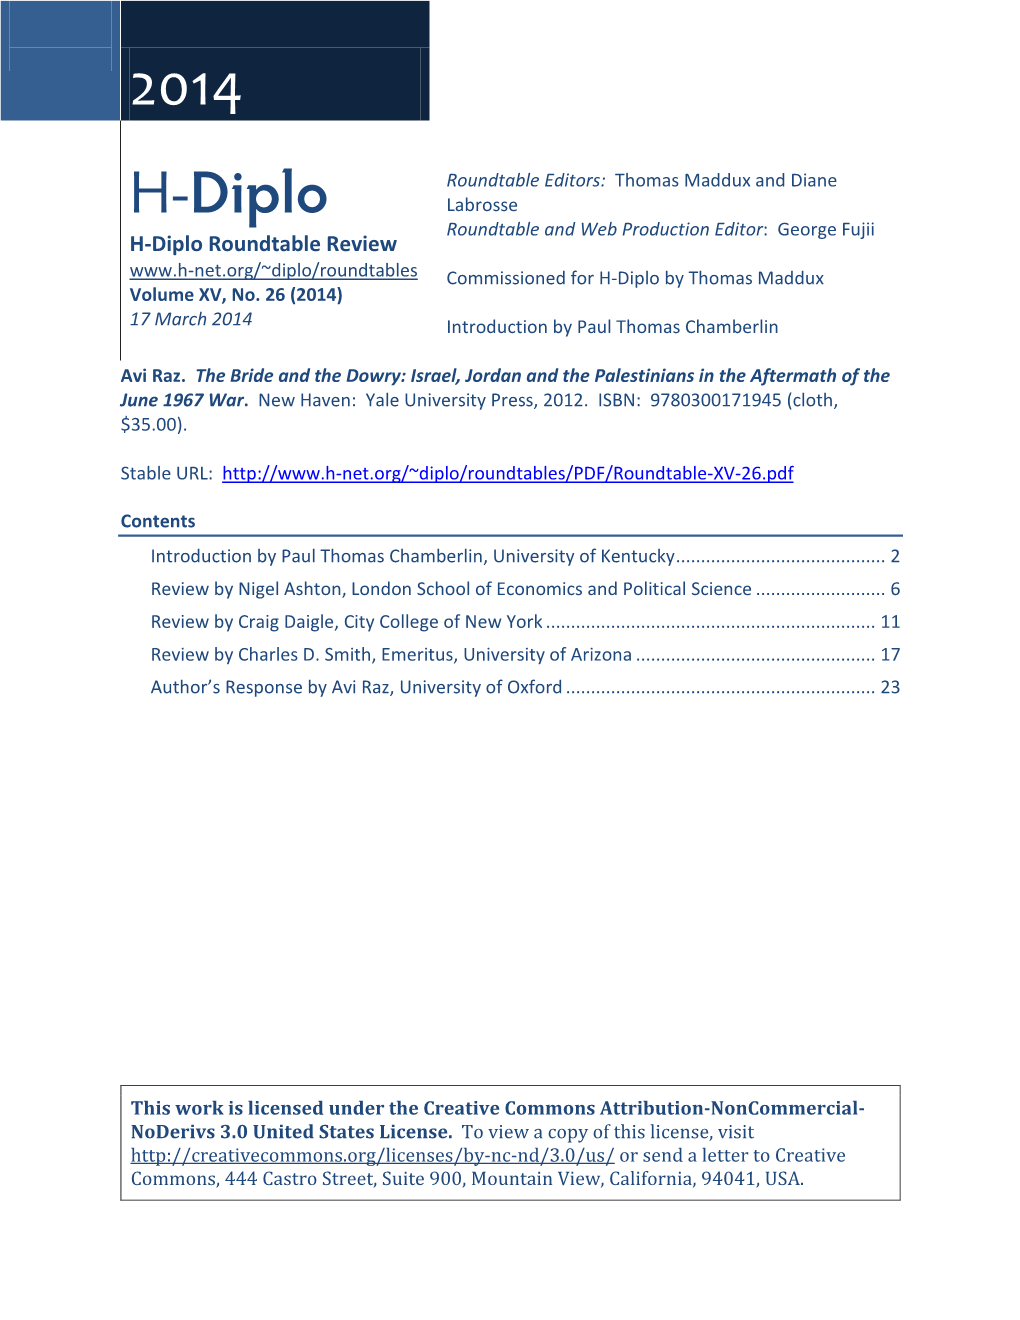 H-Diplo Roundtable, Vol. XV, No. 26